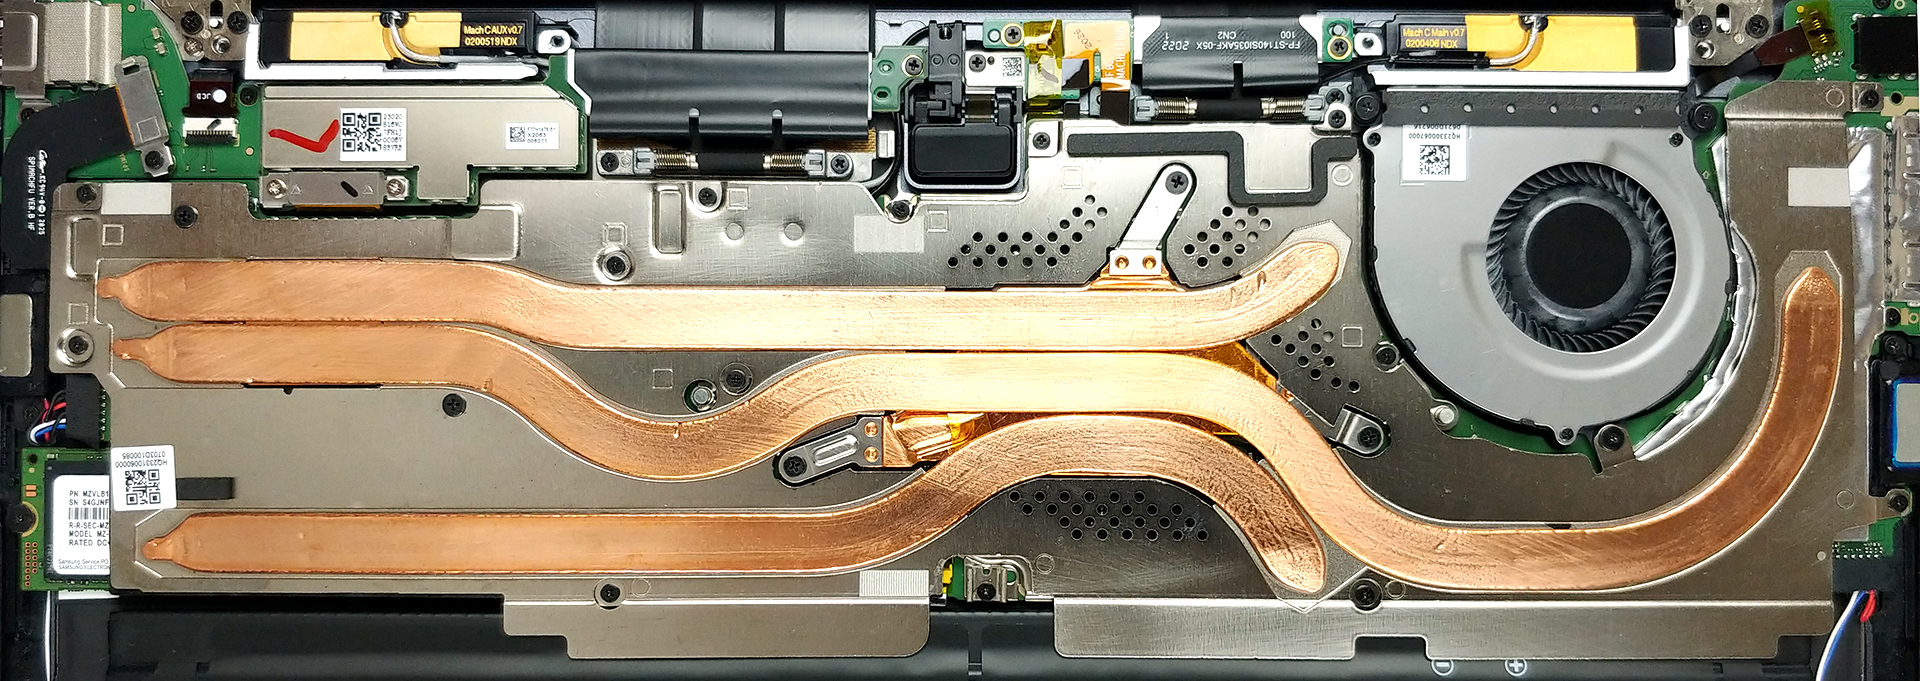 Mose blyant Surrey Inside Huawei MateBook X Pro (2020) - disassembly and upgrade options |  LaptopMedia.com